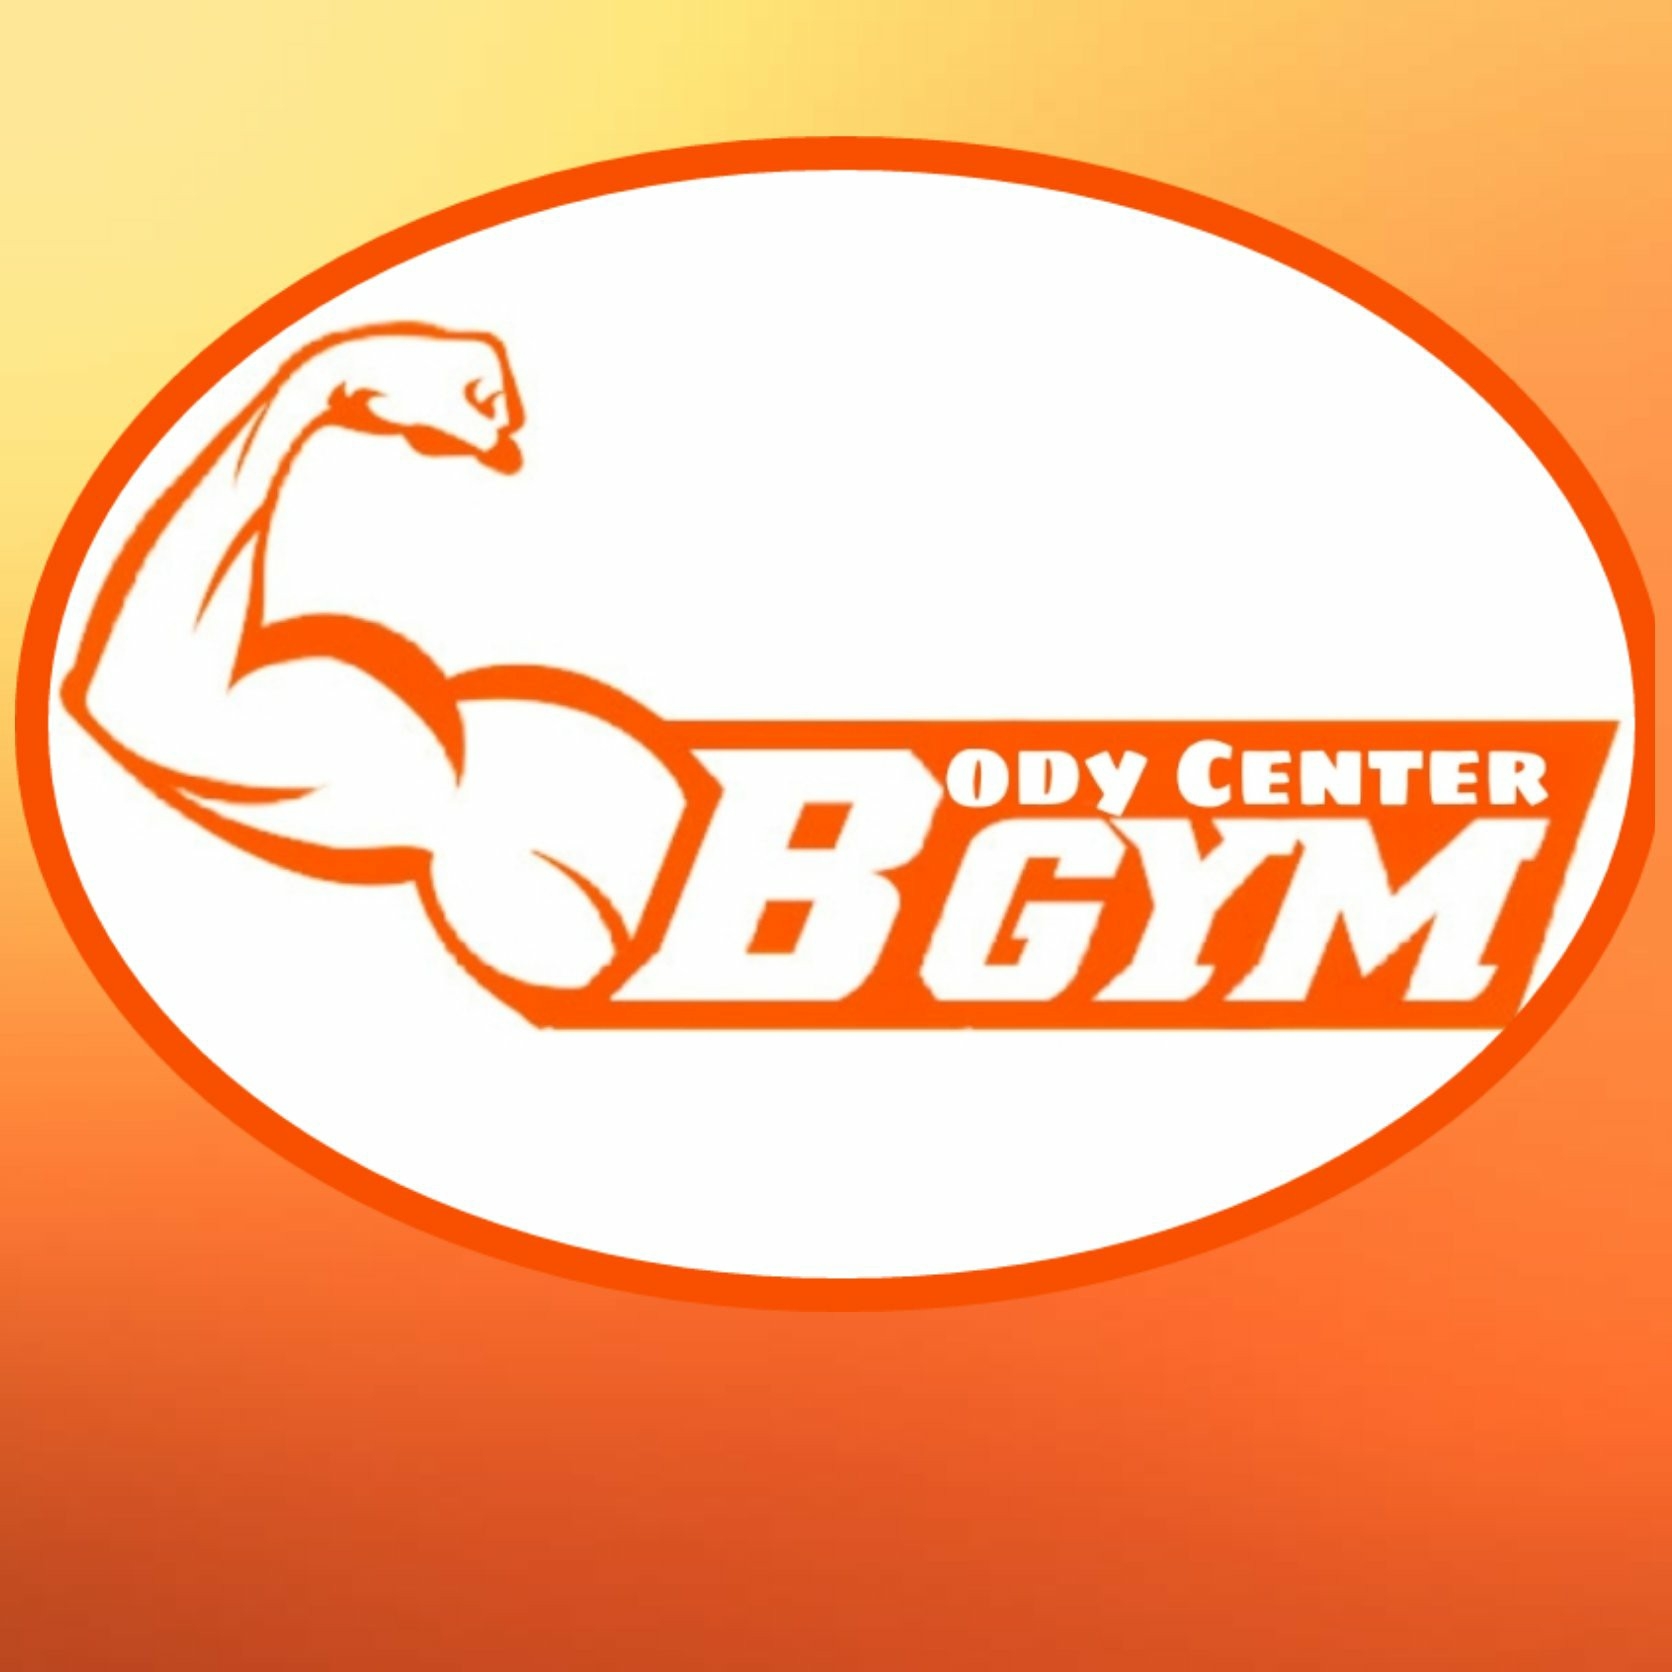 Images/Gyms/body center robore.jpeg